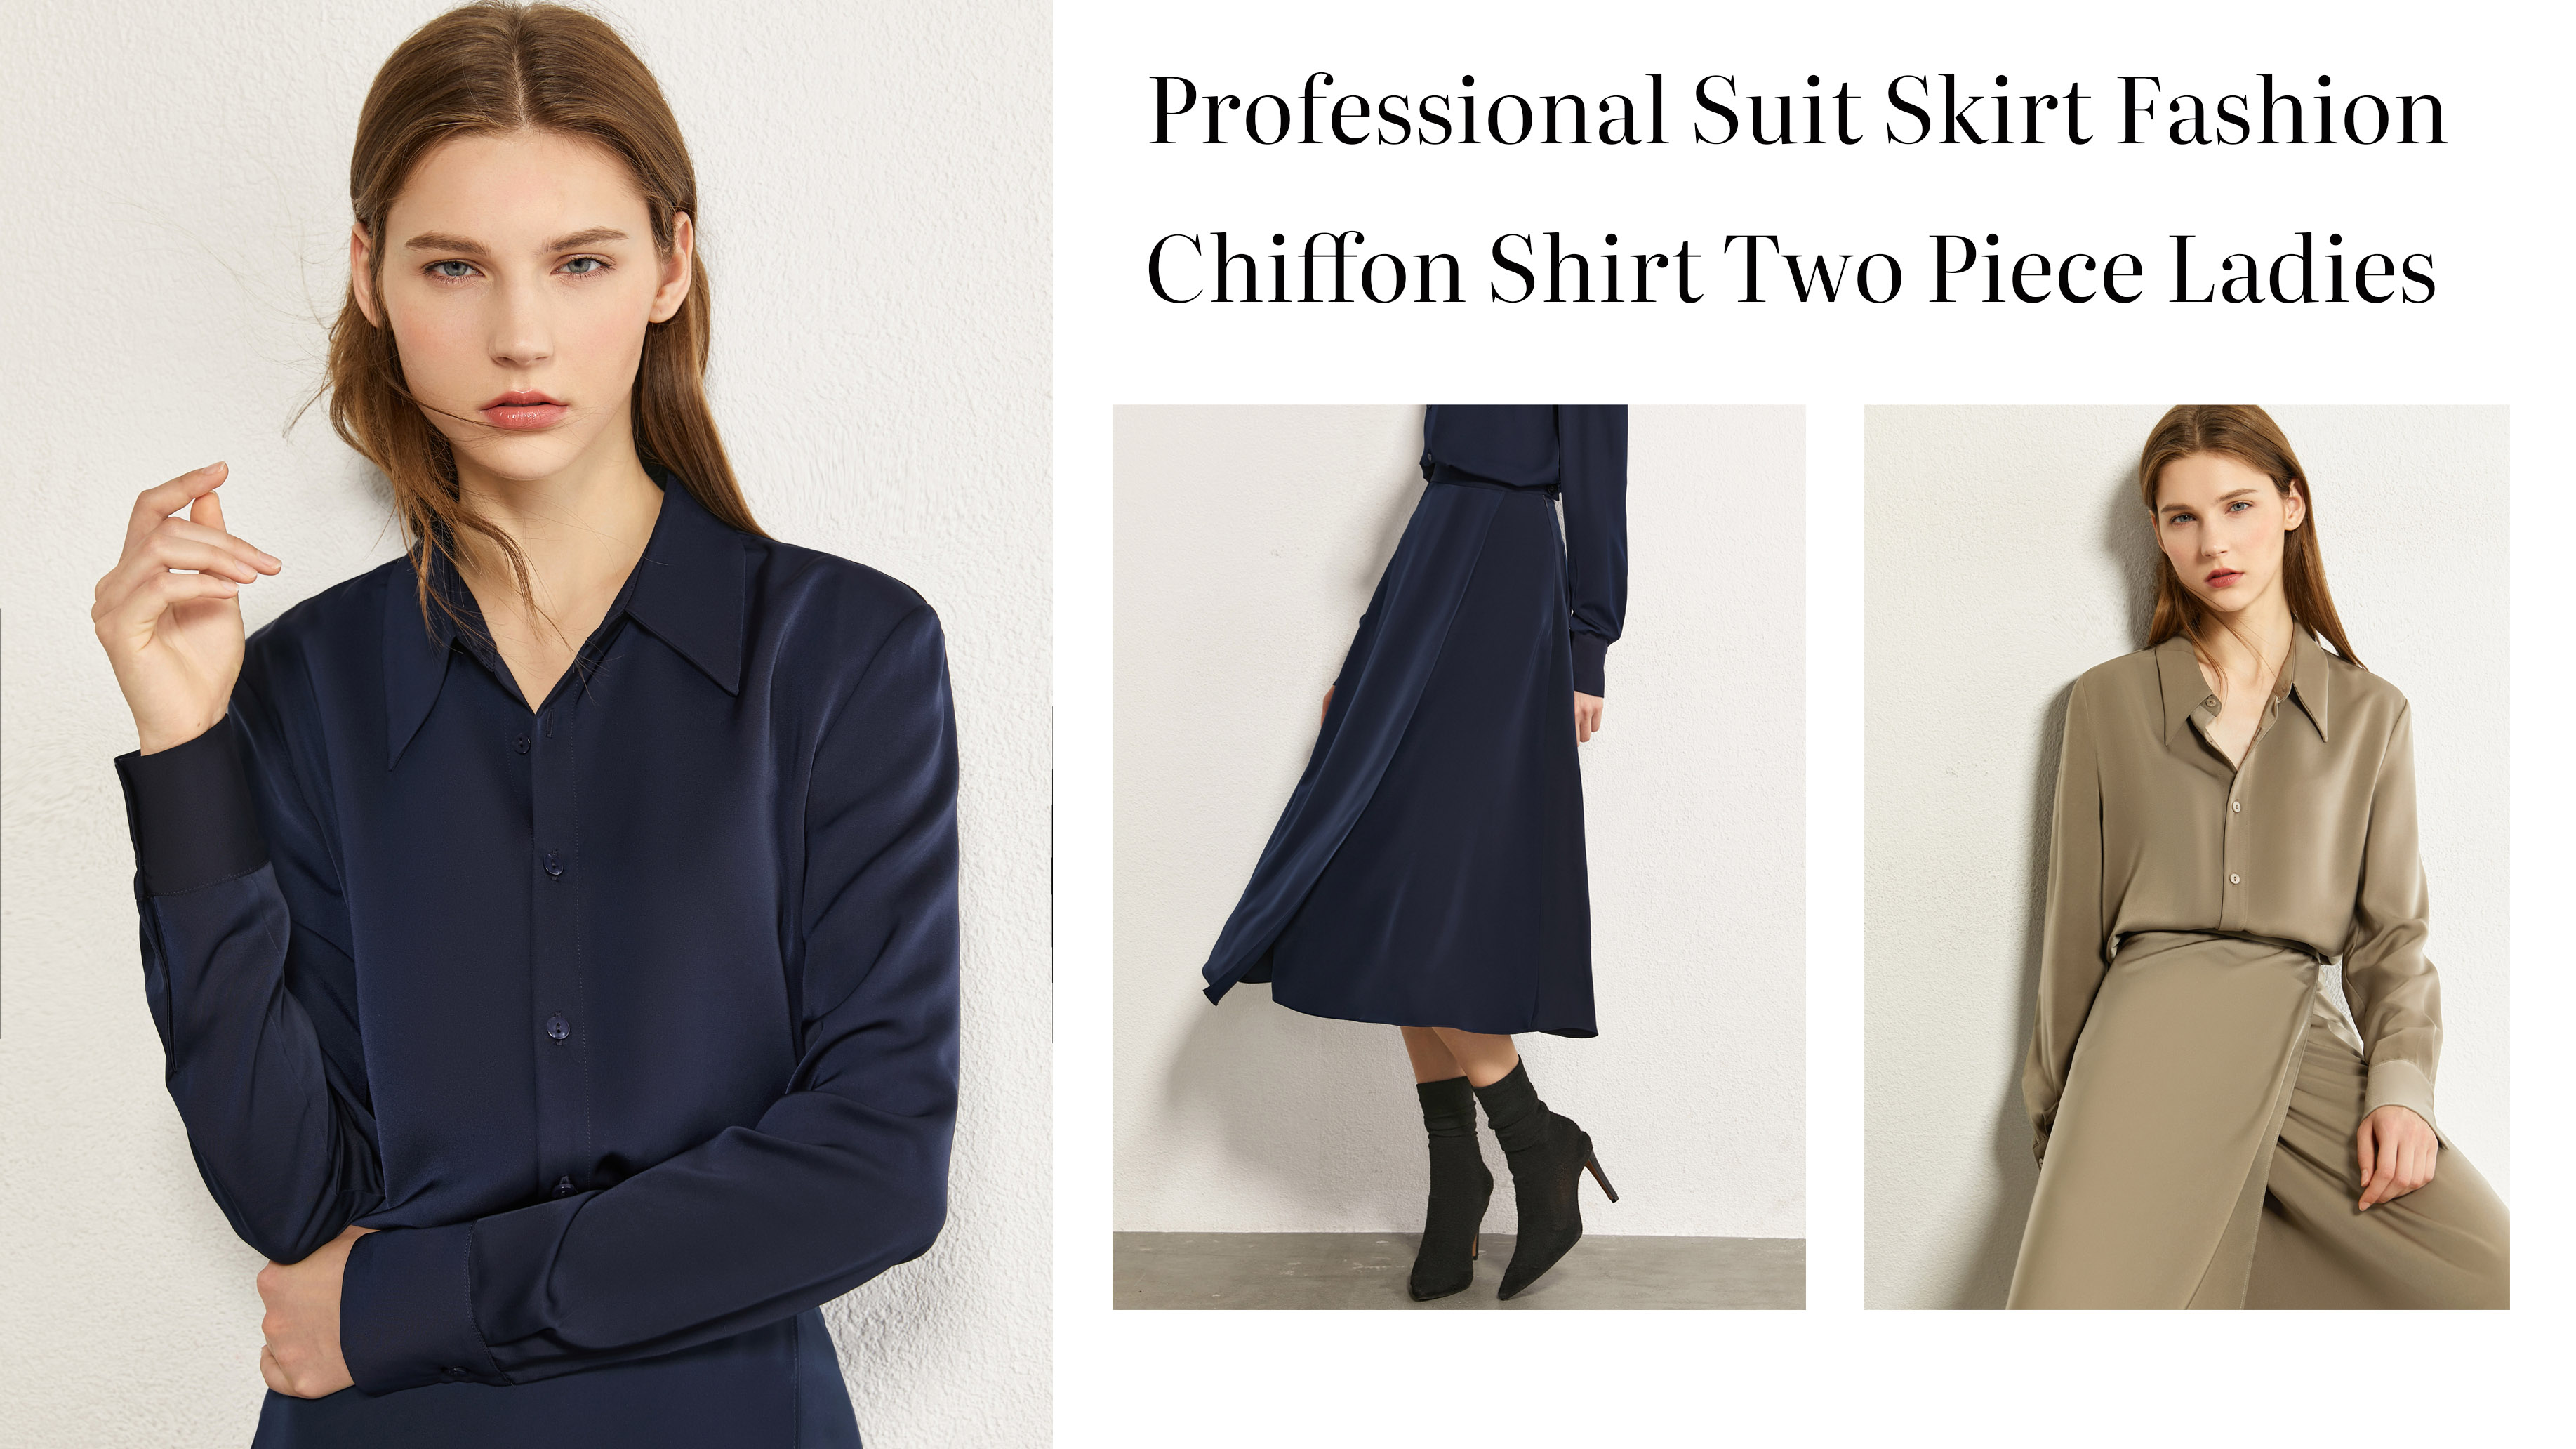 Best Professional Suit Skirt Fashion Work Wear Chiffon Shirt Two Piece Ladies Company – Auschalink